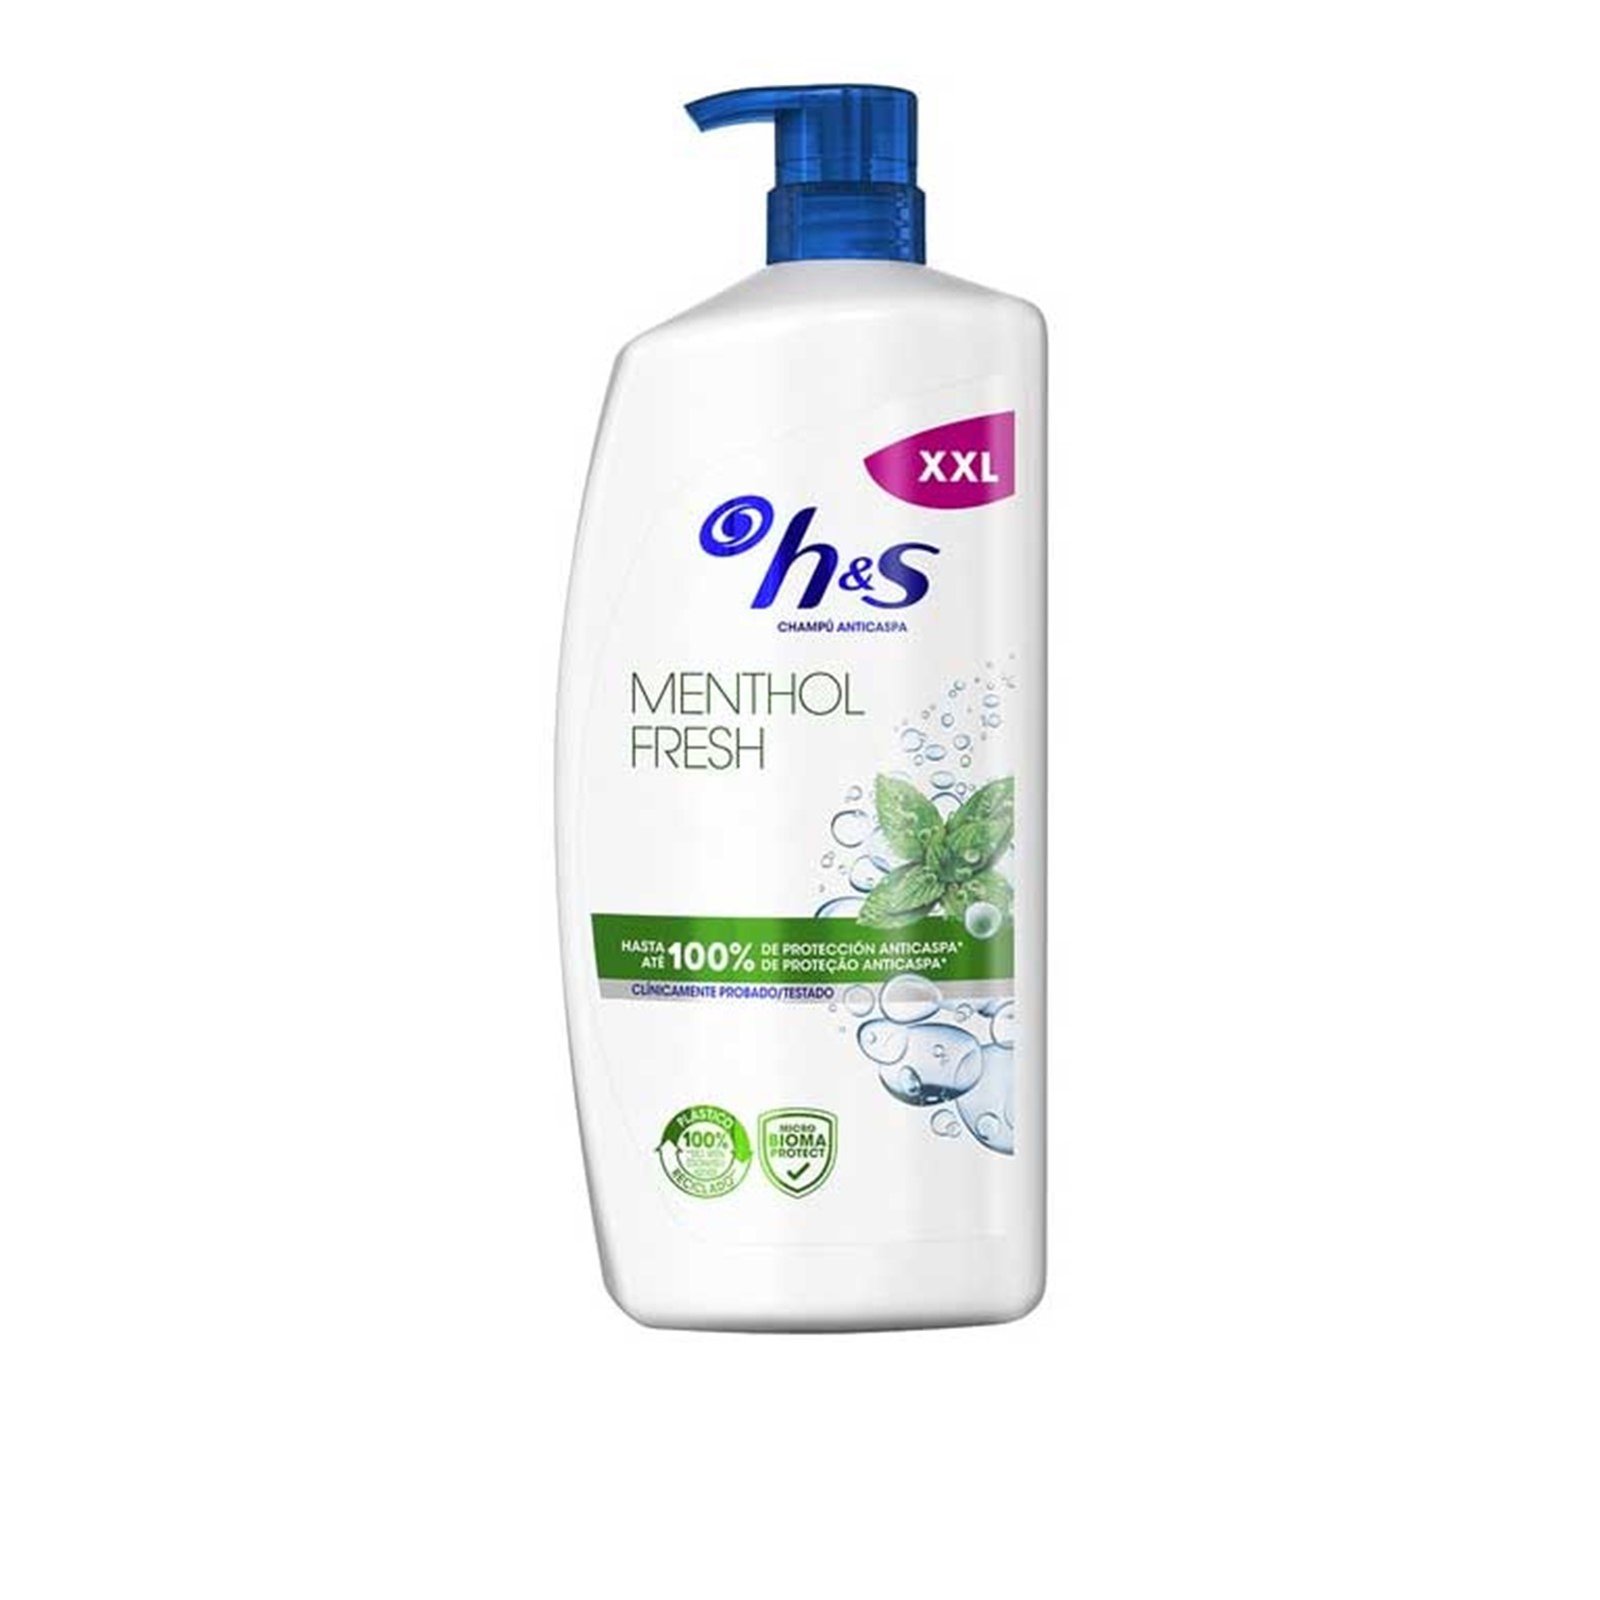 H&S Menthol Fresh Shampoo 1L